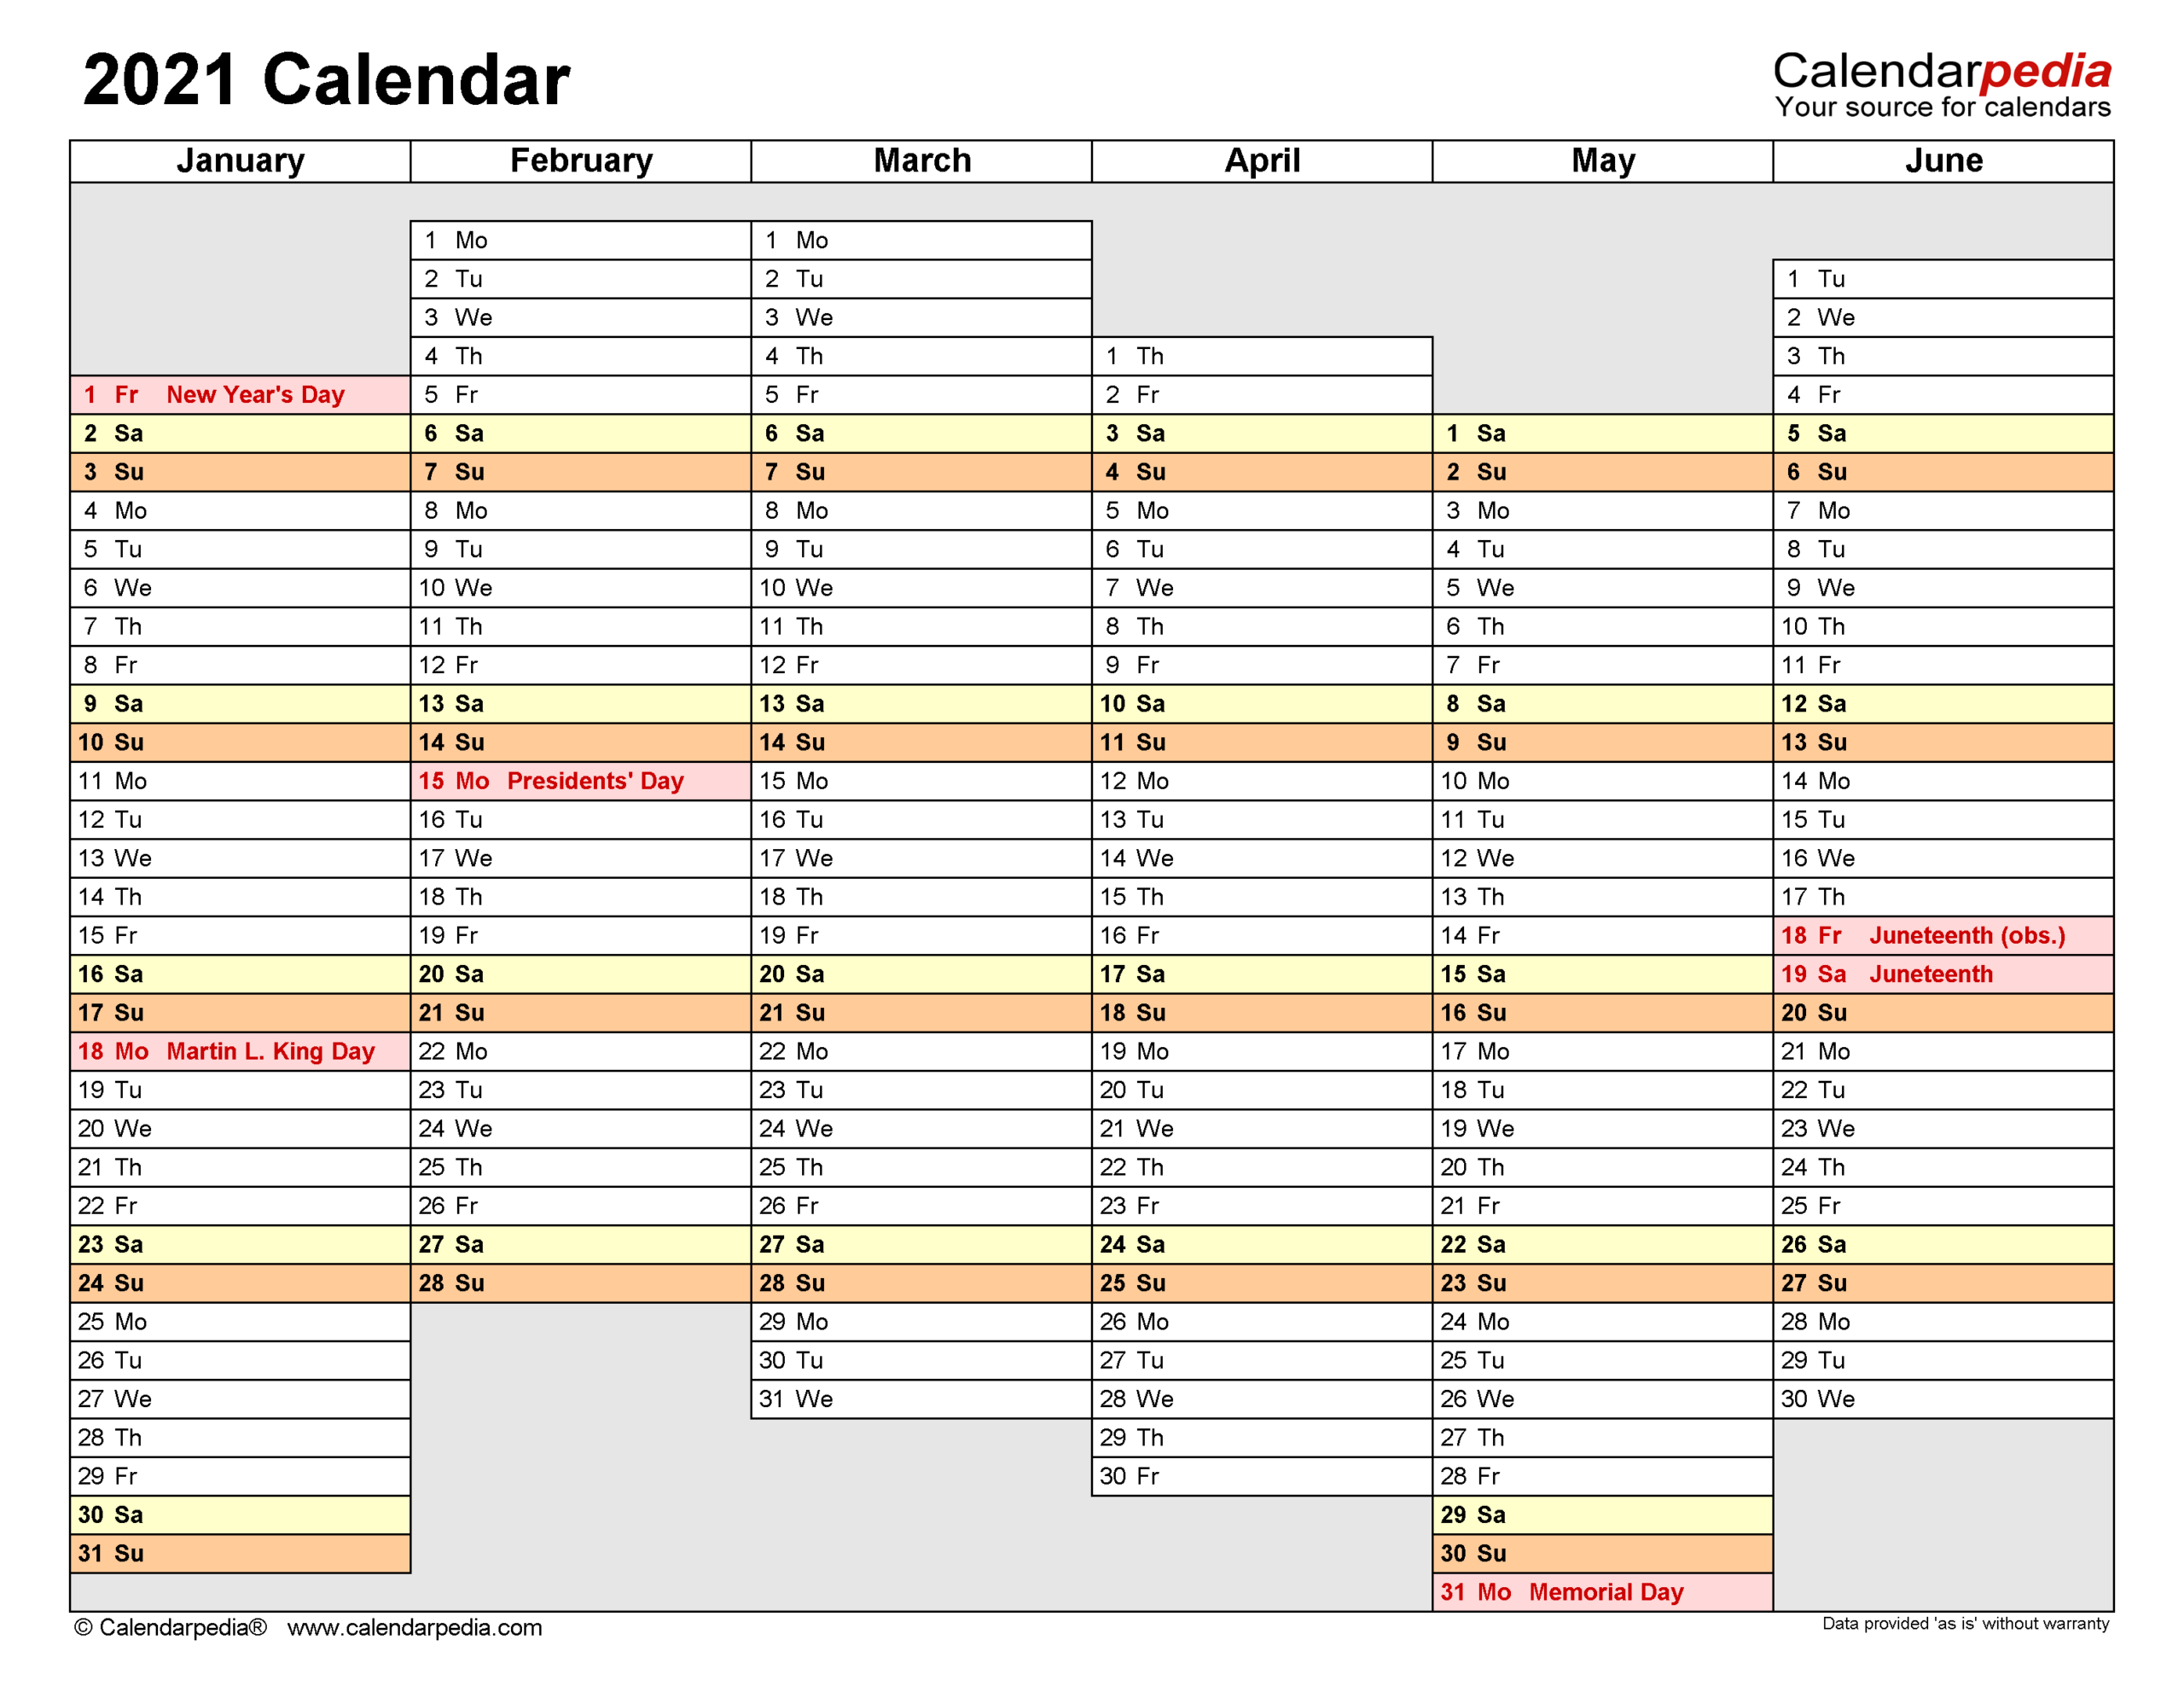 2021 Calendar  Free Printable Excel Templates  Calendarpedia within 2021 Calendar In Excel Free